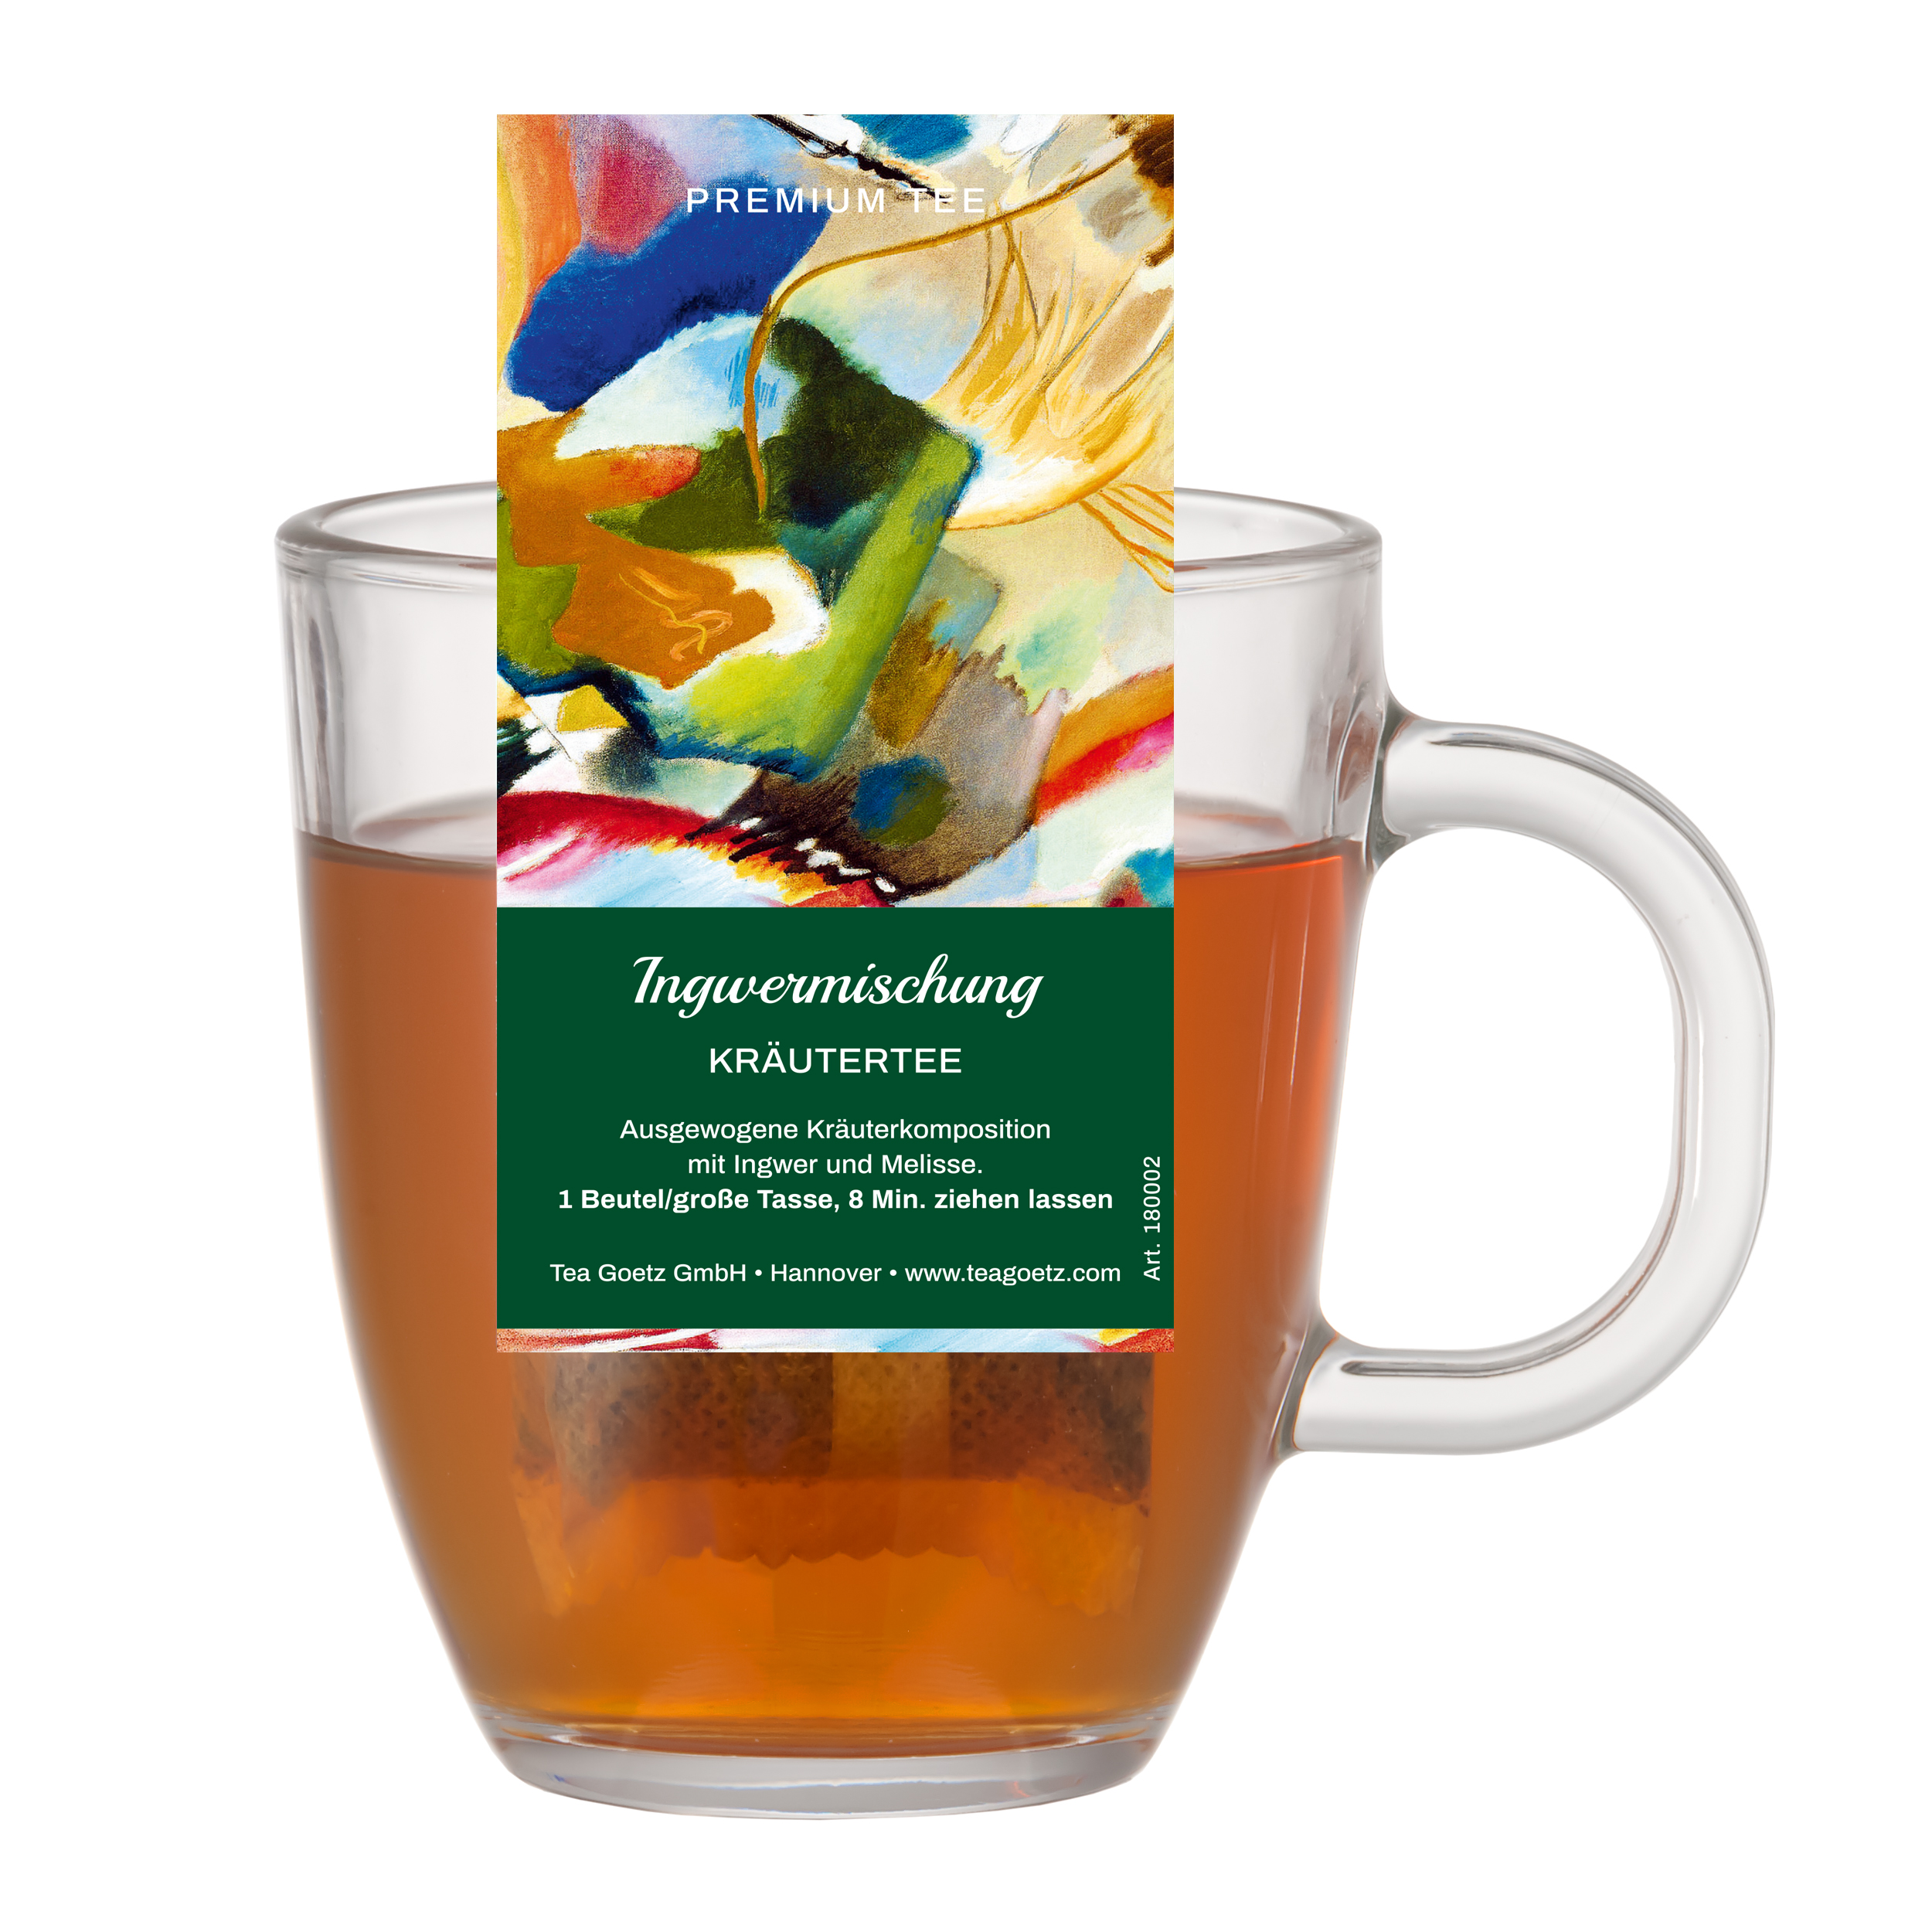 Big Tea Bag Ingwermischung - Kräutertee (Teebeutel)